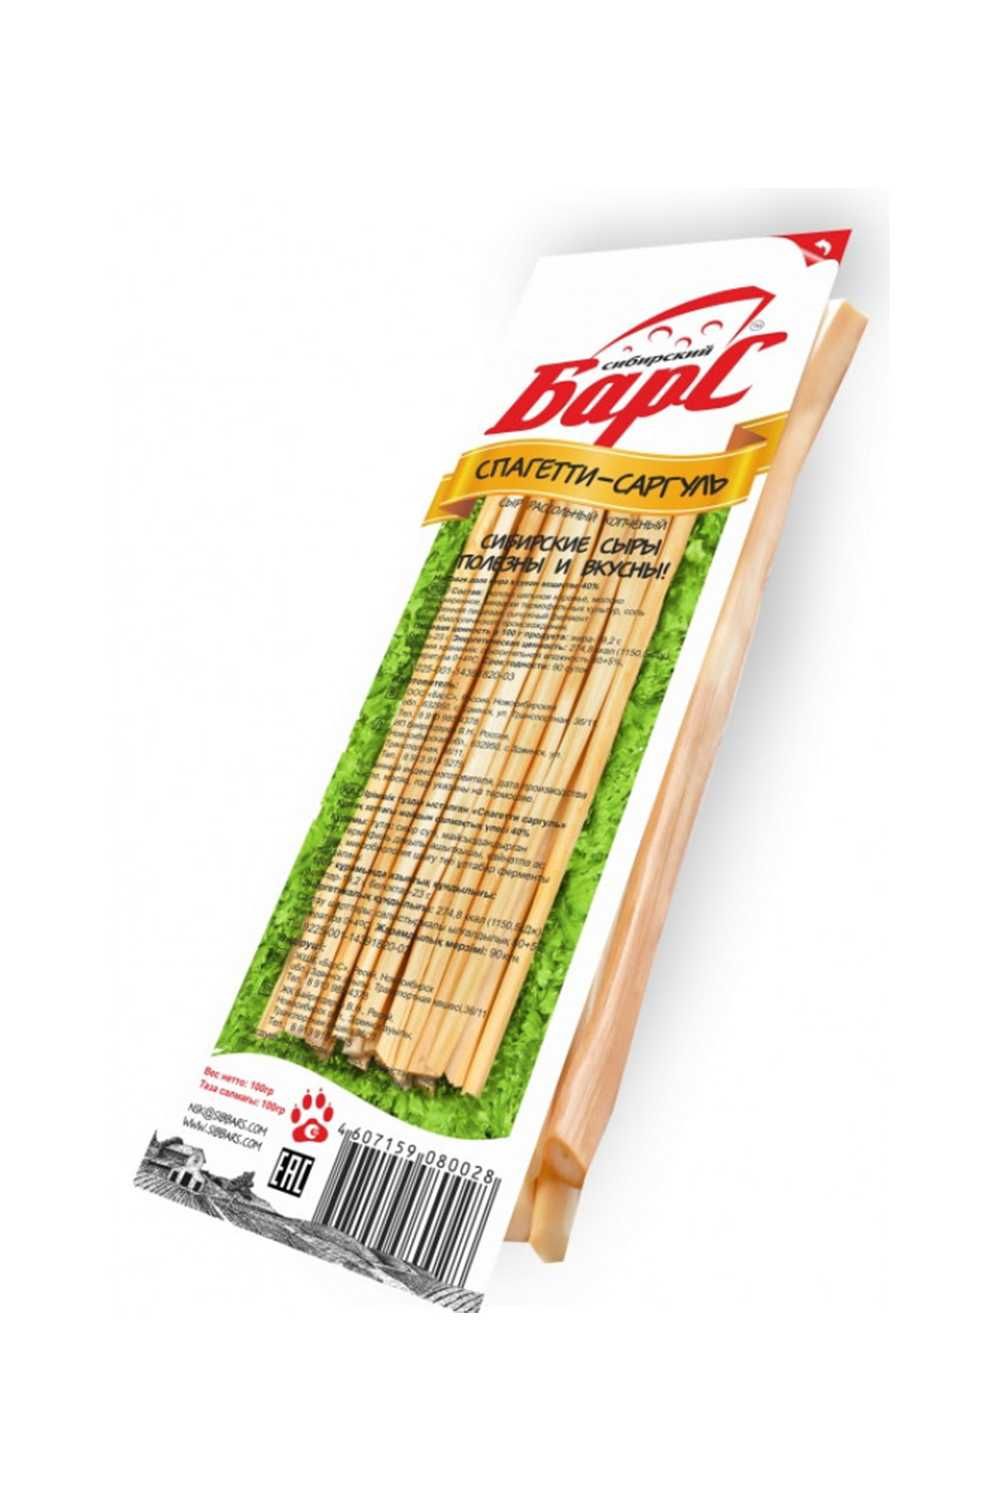 Сыр Спагетти-саргуль белый в/у (Барс) 100 гр